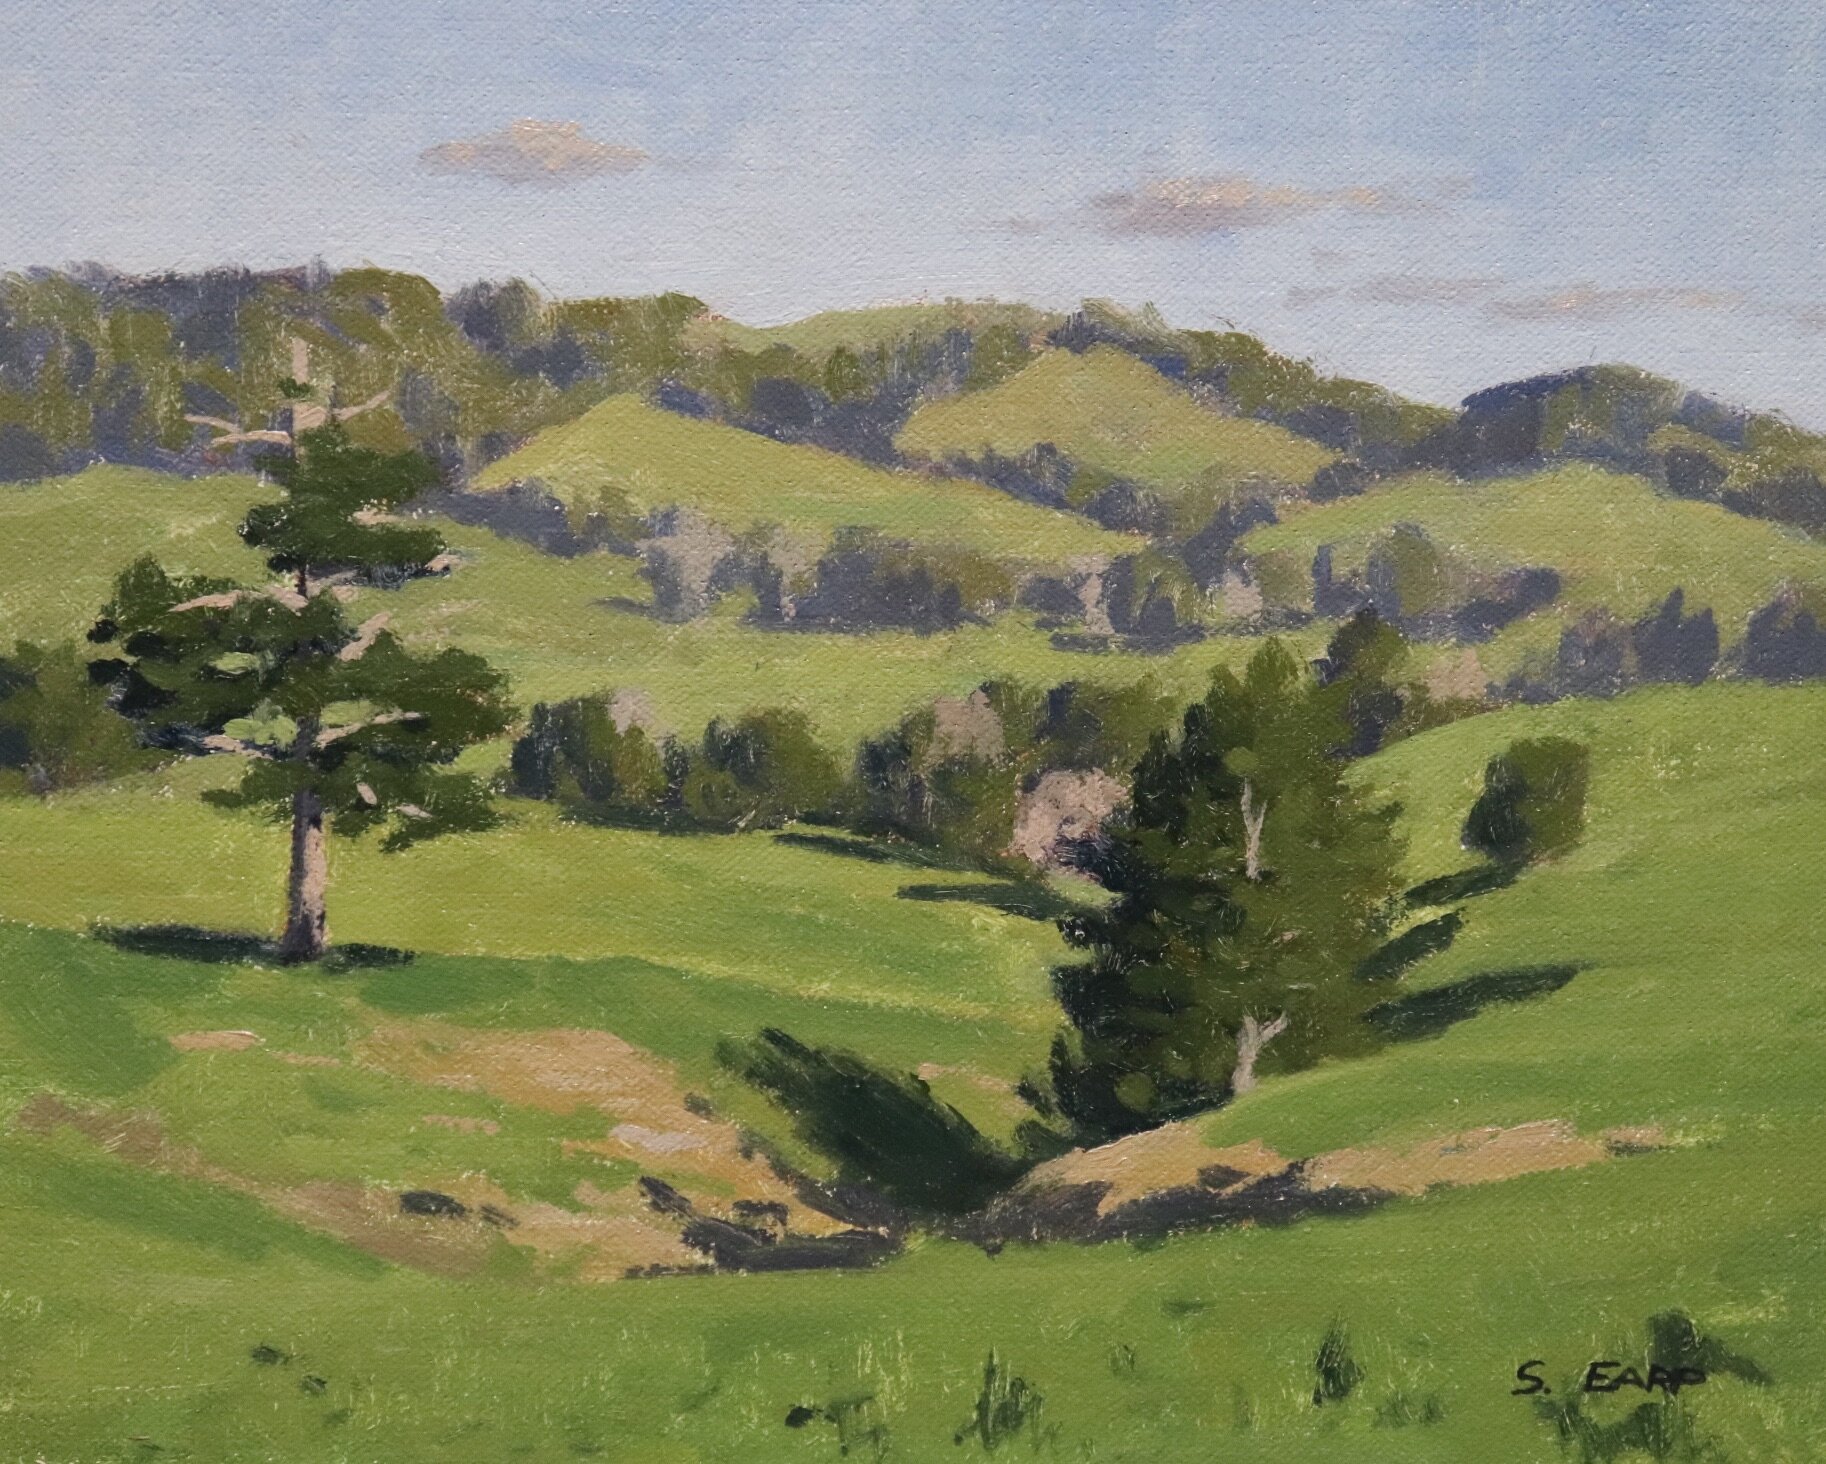 Rolling Hills - Northland - Samuel Earp - oil painting.jpeg